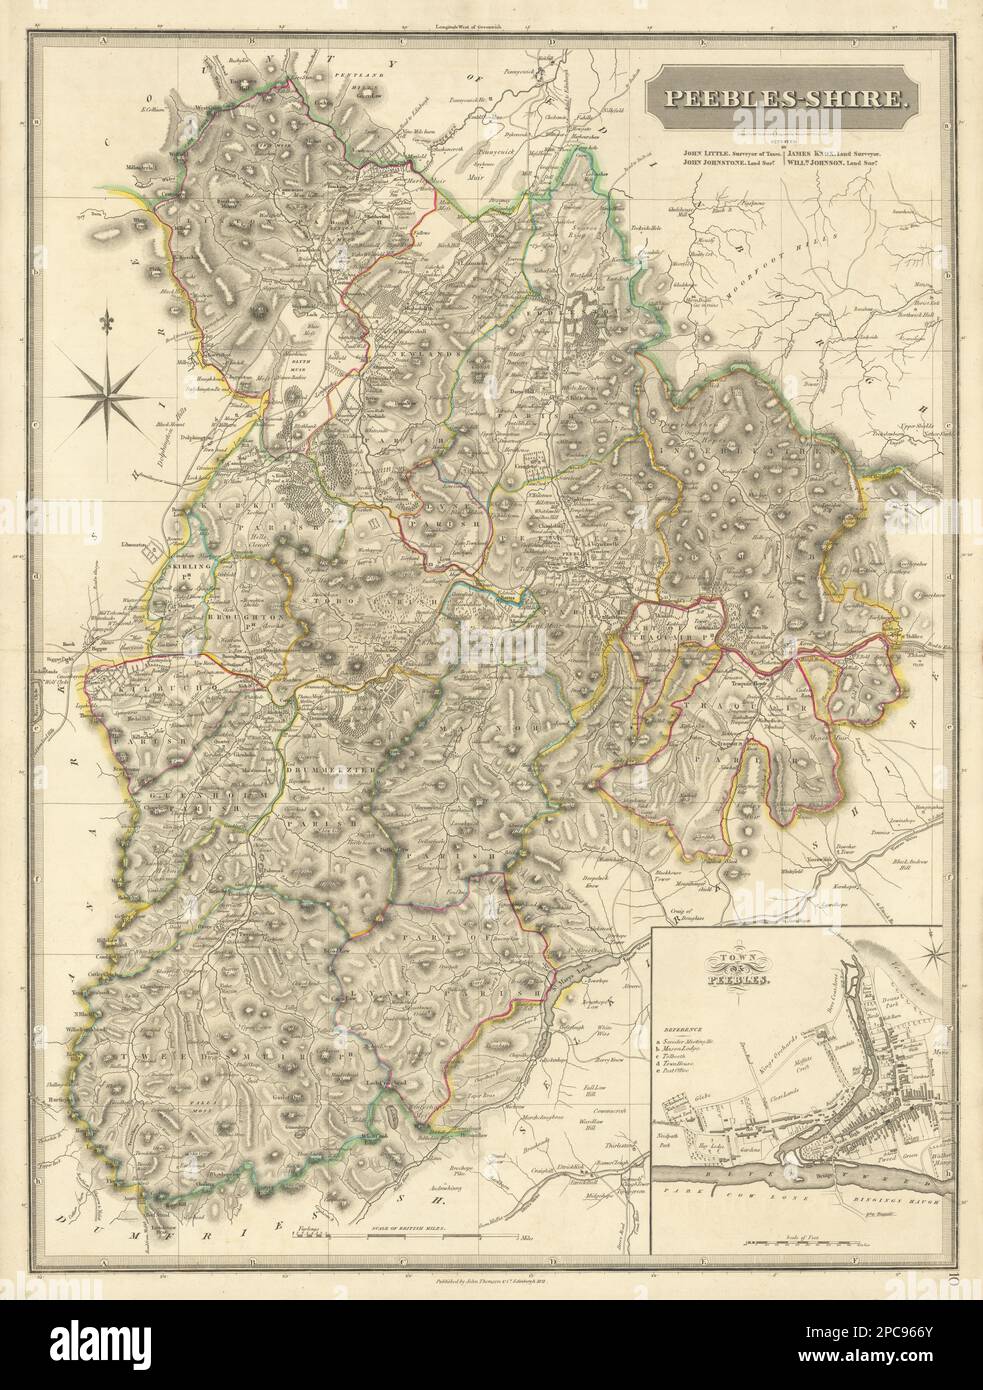 Peebles shire & town plan. Innerleithen West Linton Ettrick. THOMSON 1832 map Stock Photo